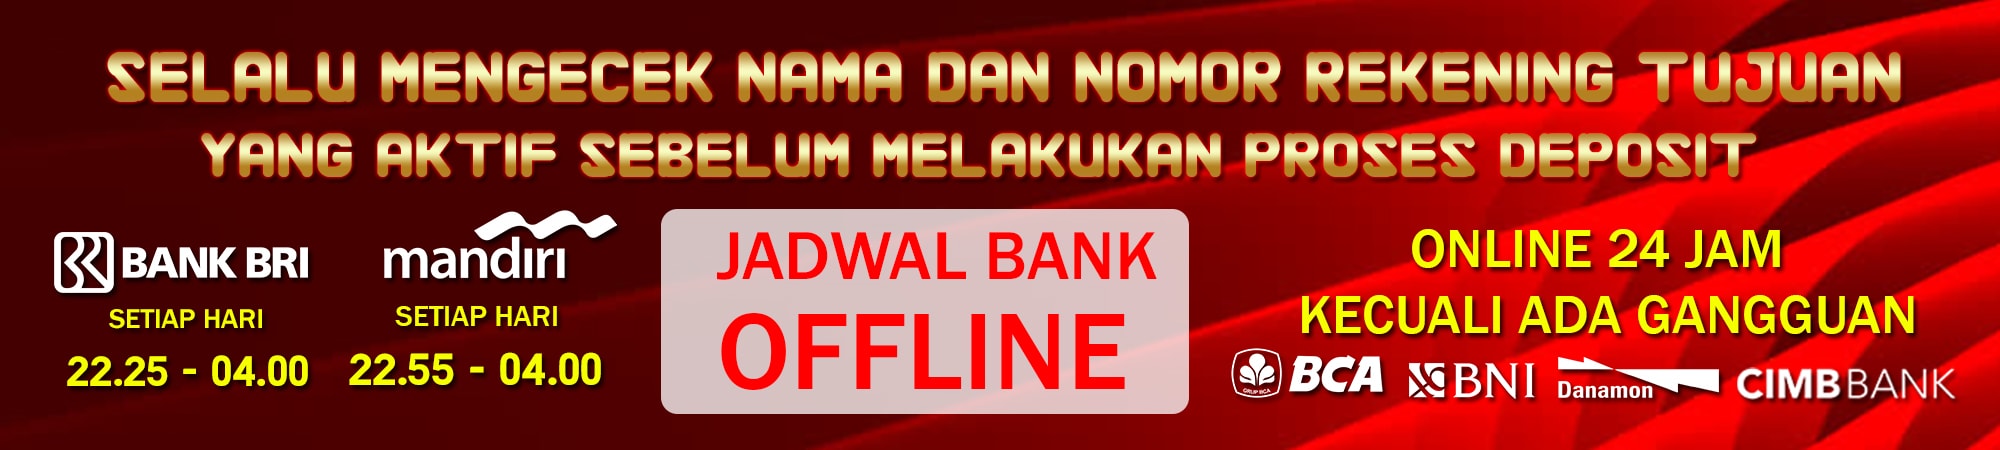 Jadwal Bank Offline